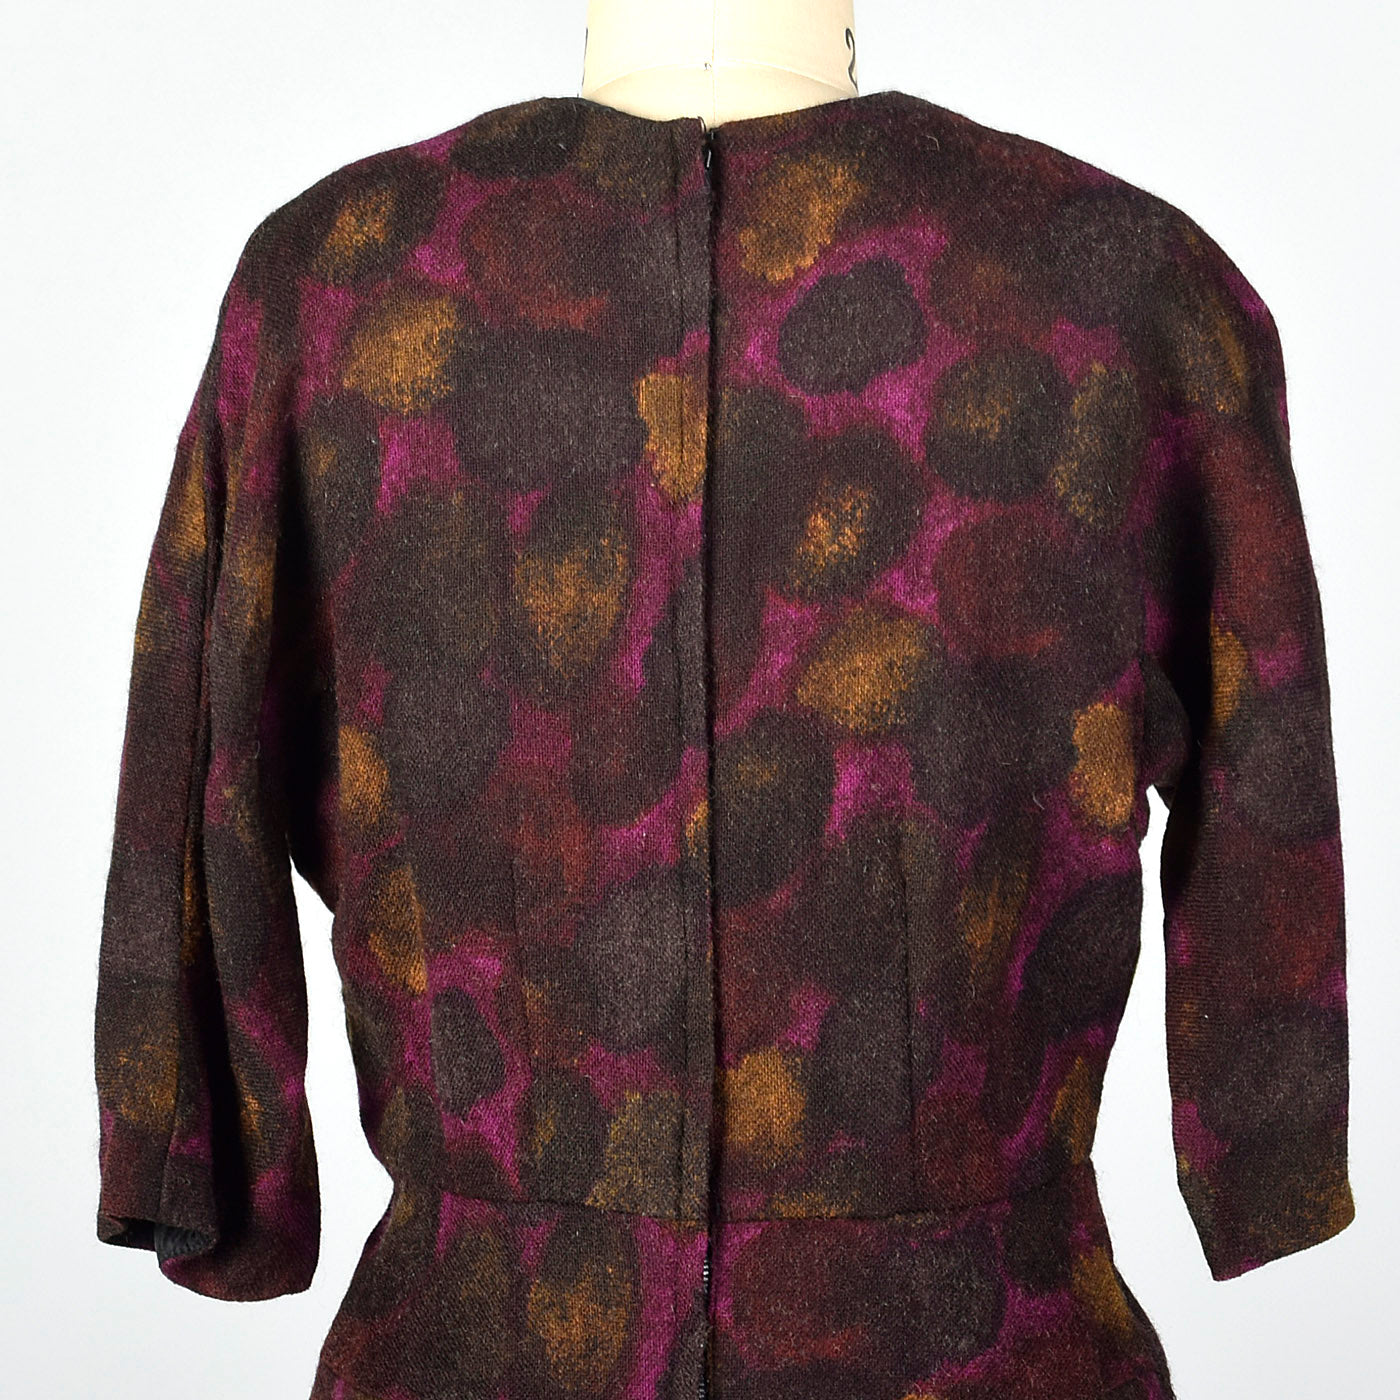 1950s Abstract Purple Print Dress